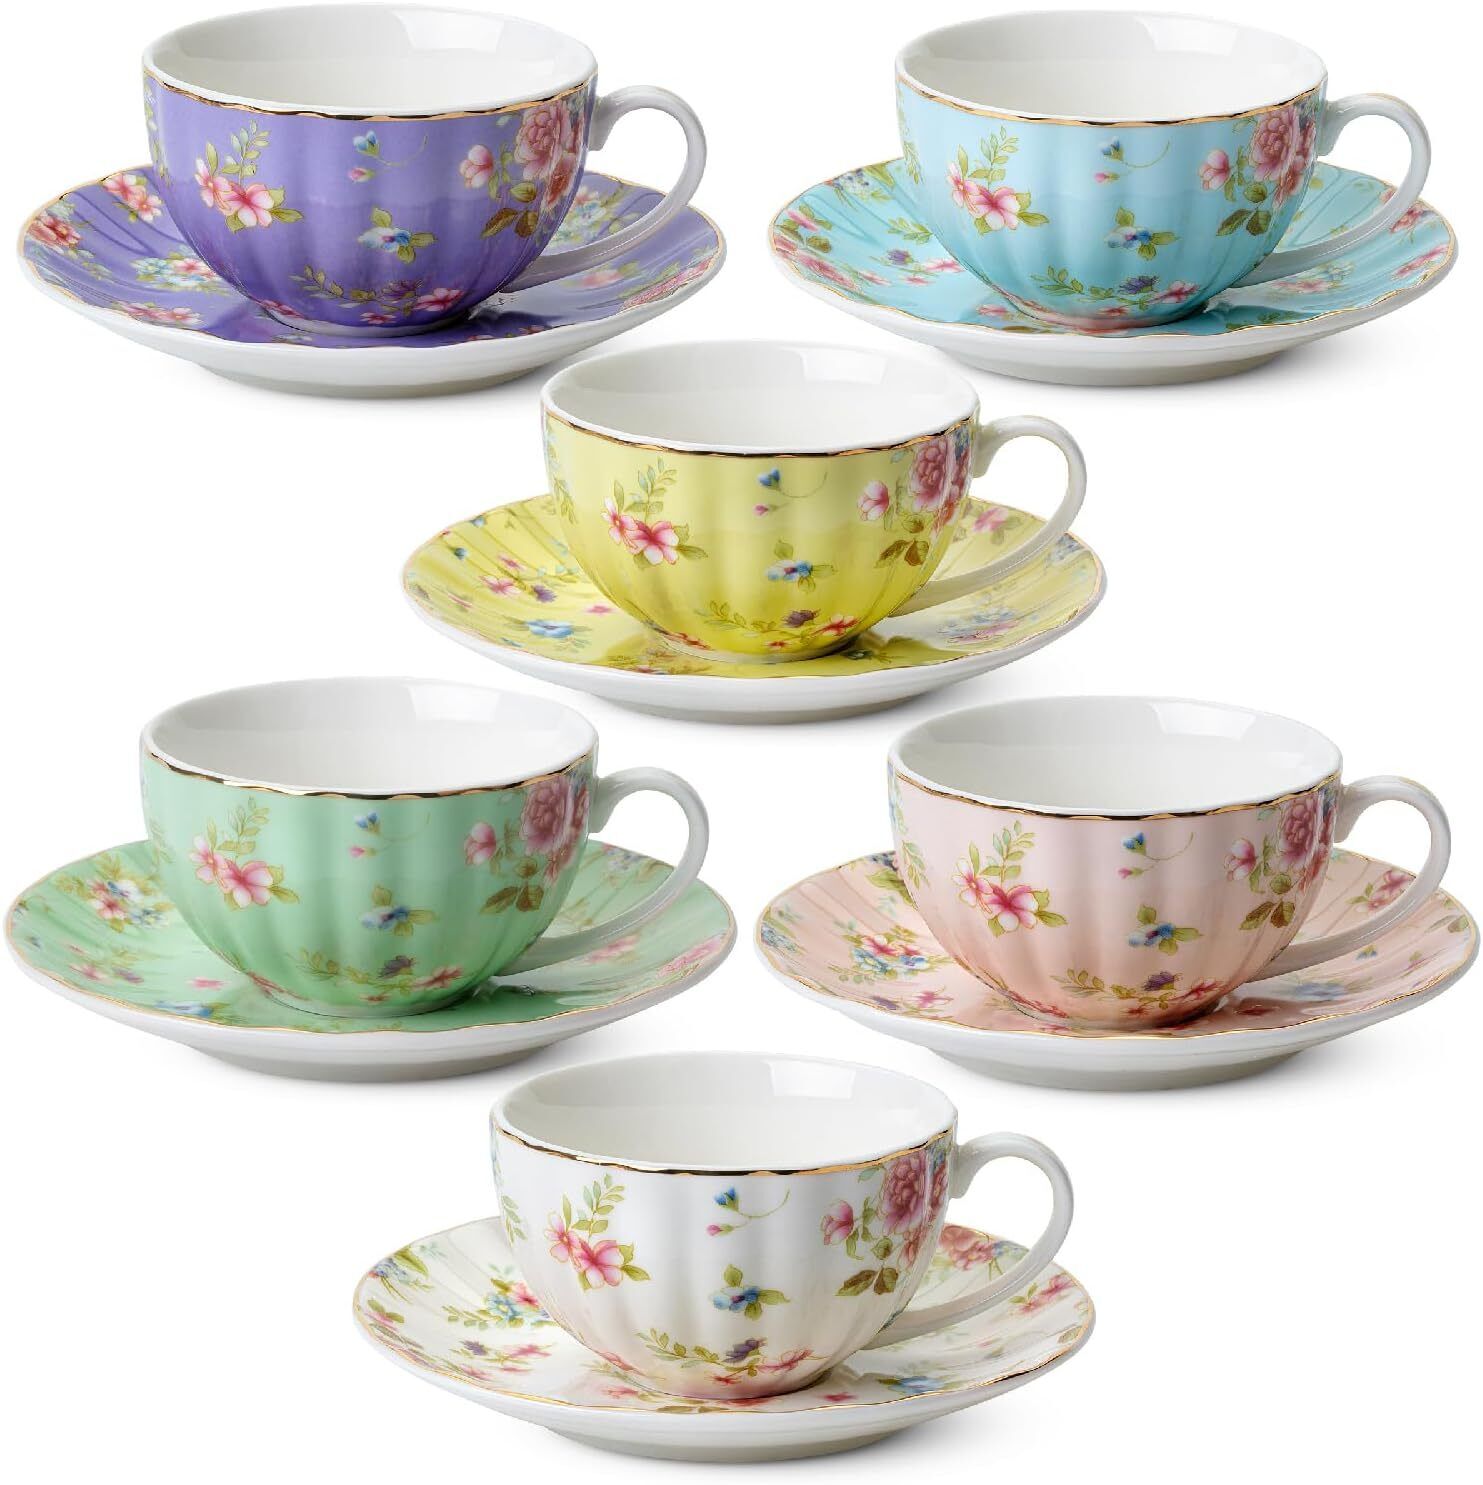 Cups and Saucers Set of 6, Tea Set, Floral Tea Cups (7oz), Porcelain Tea Cups,